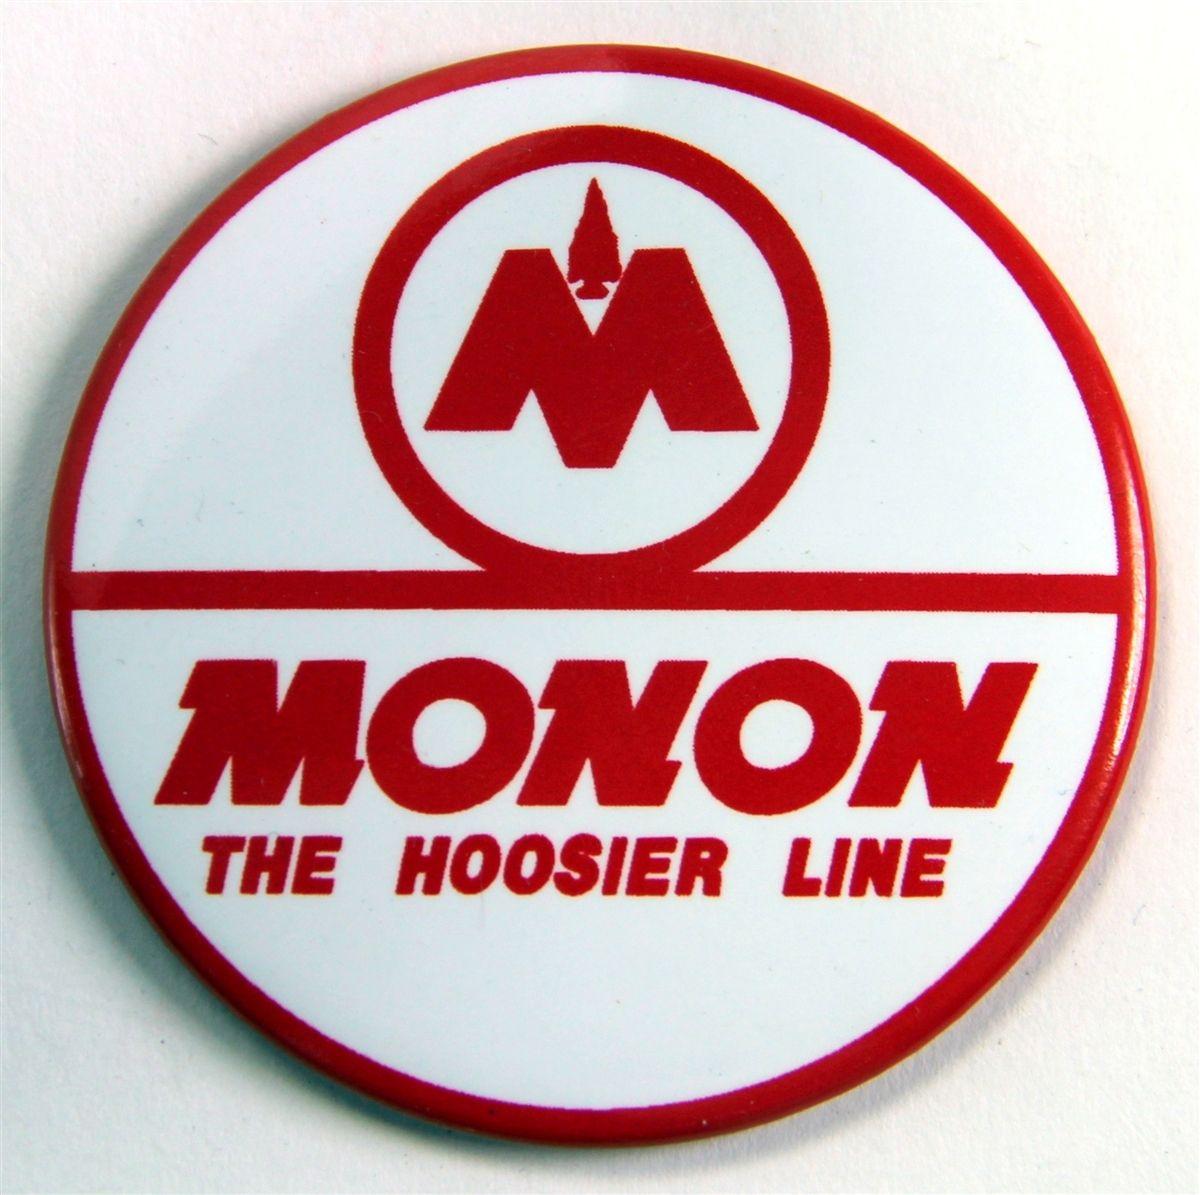 Refrigerator Logo - Country Trains RMMONO Monon, The Hoosier Line Logo Refrigerator ...